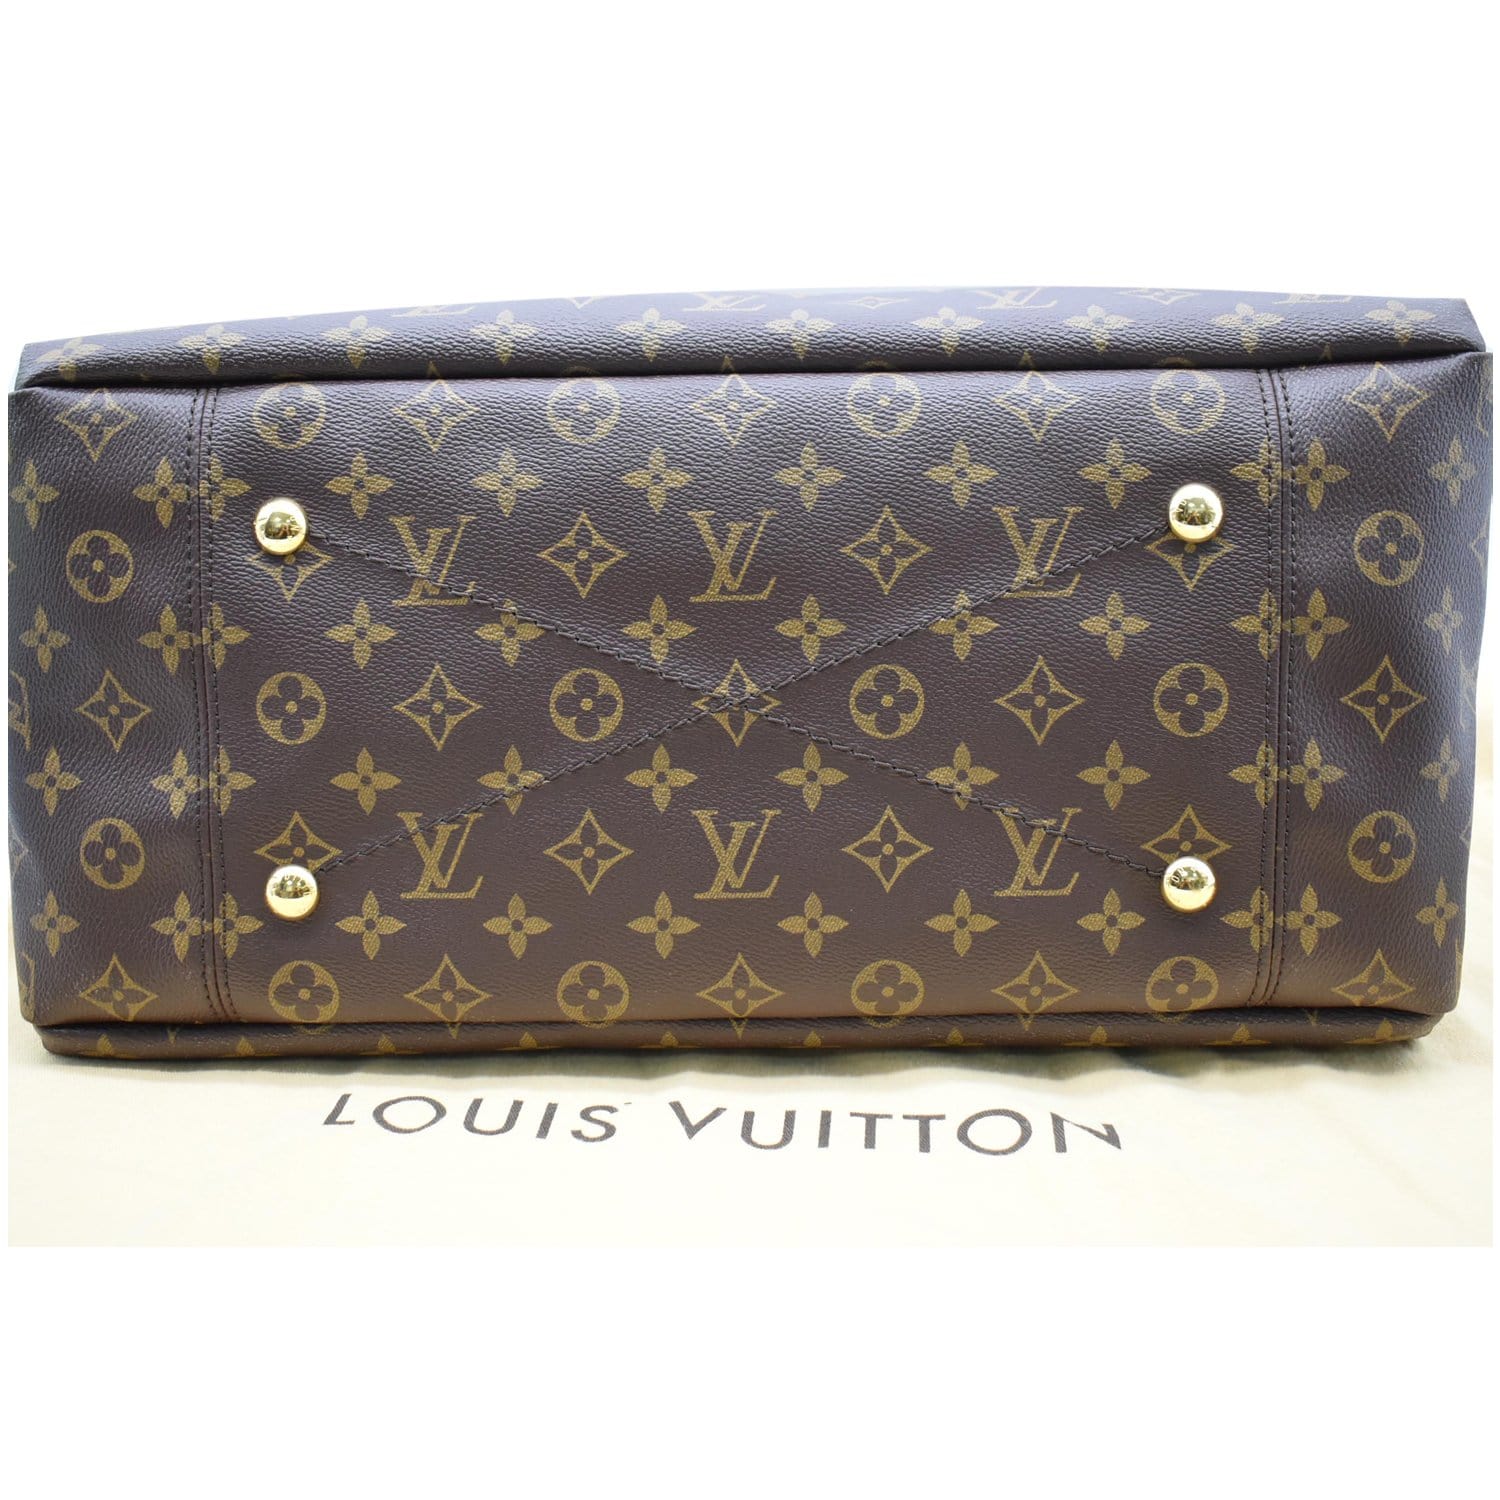 Louis Vuitton - Authenticated Artsy Handbag - Leather Brown Plain for Women, Good Condition